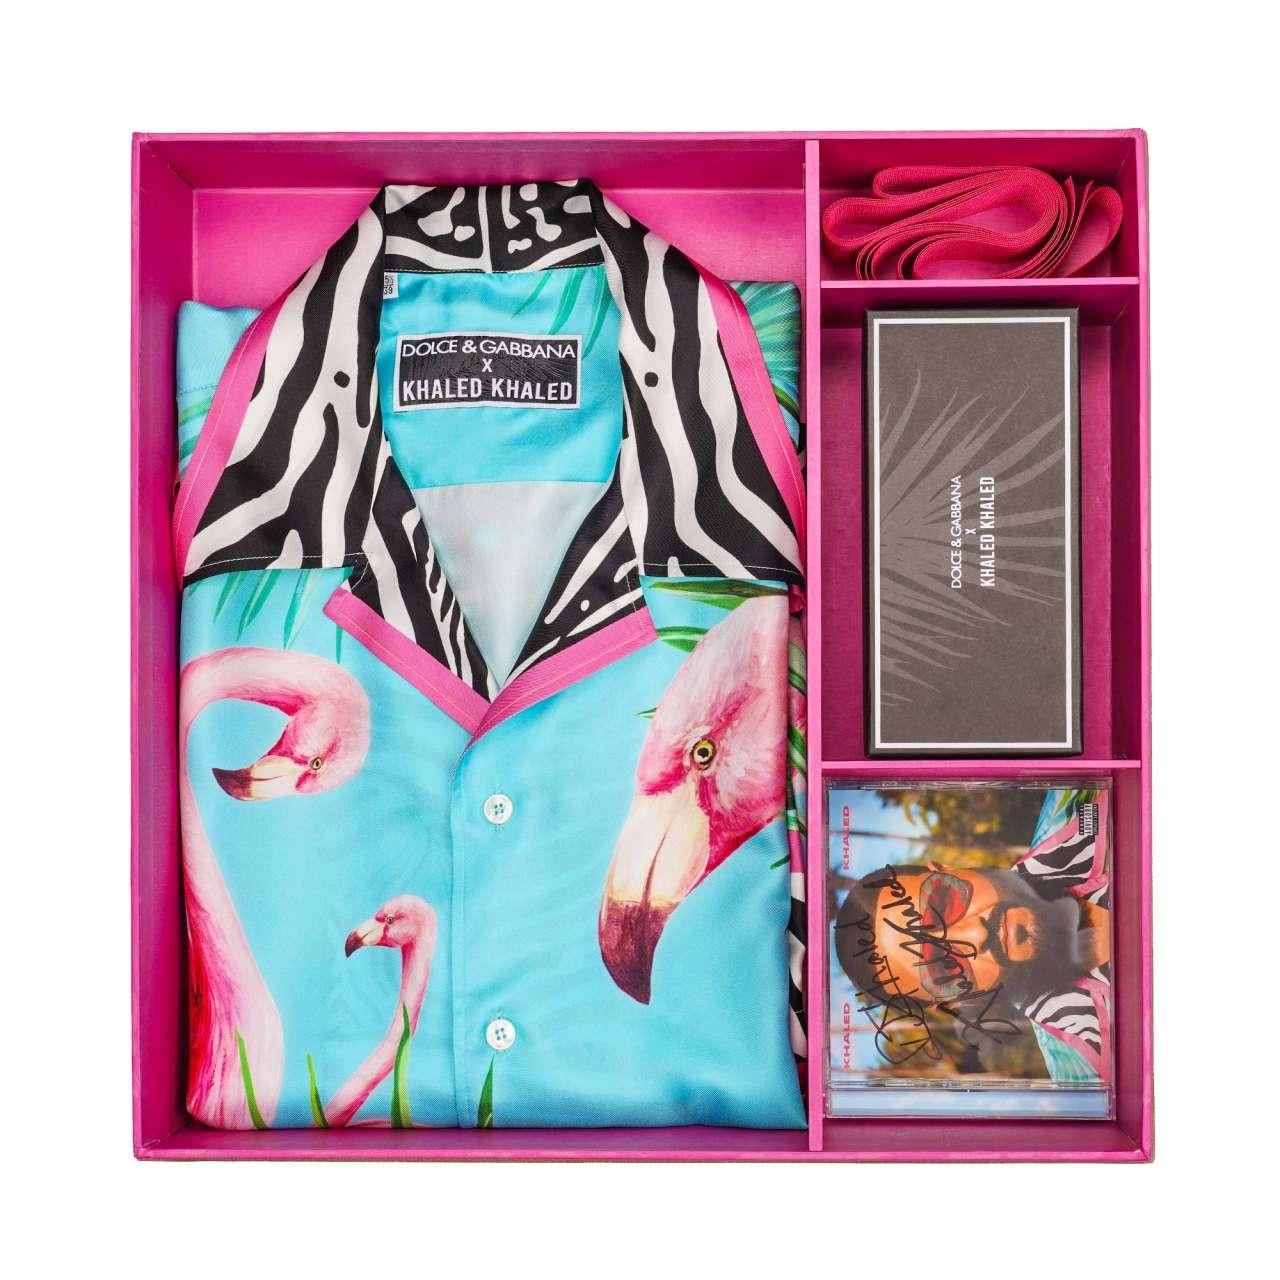 Dolce & Gabbana - DJ Khaled Silk Flamingo Zebra Shirt with Sunglasses and CD 43 For Sale 4